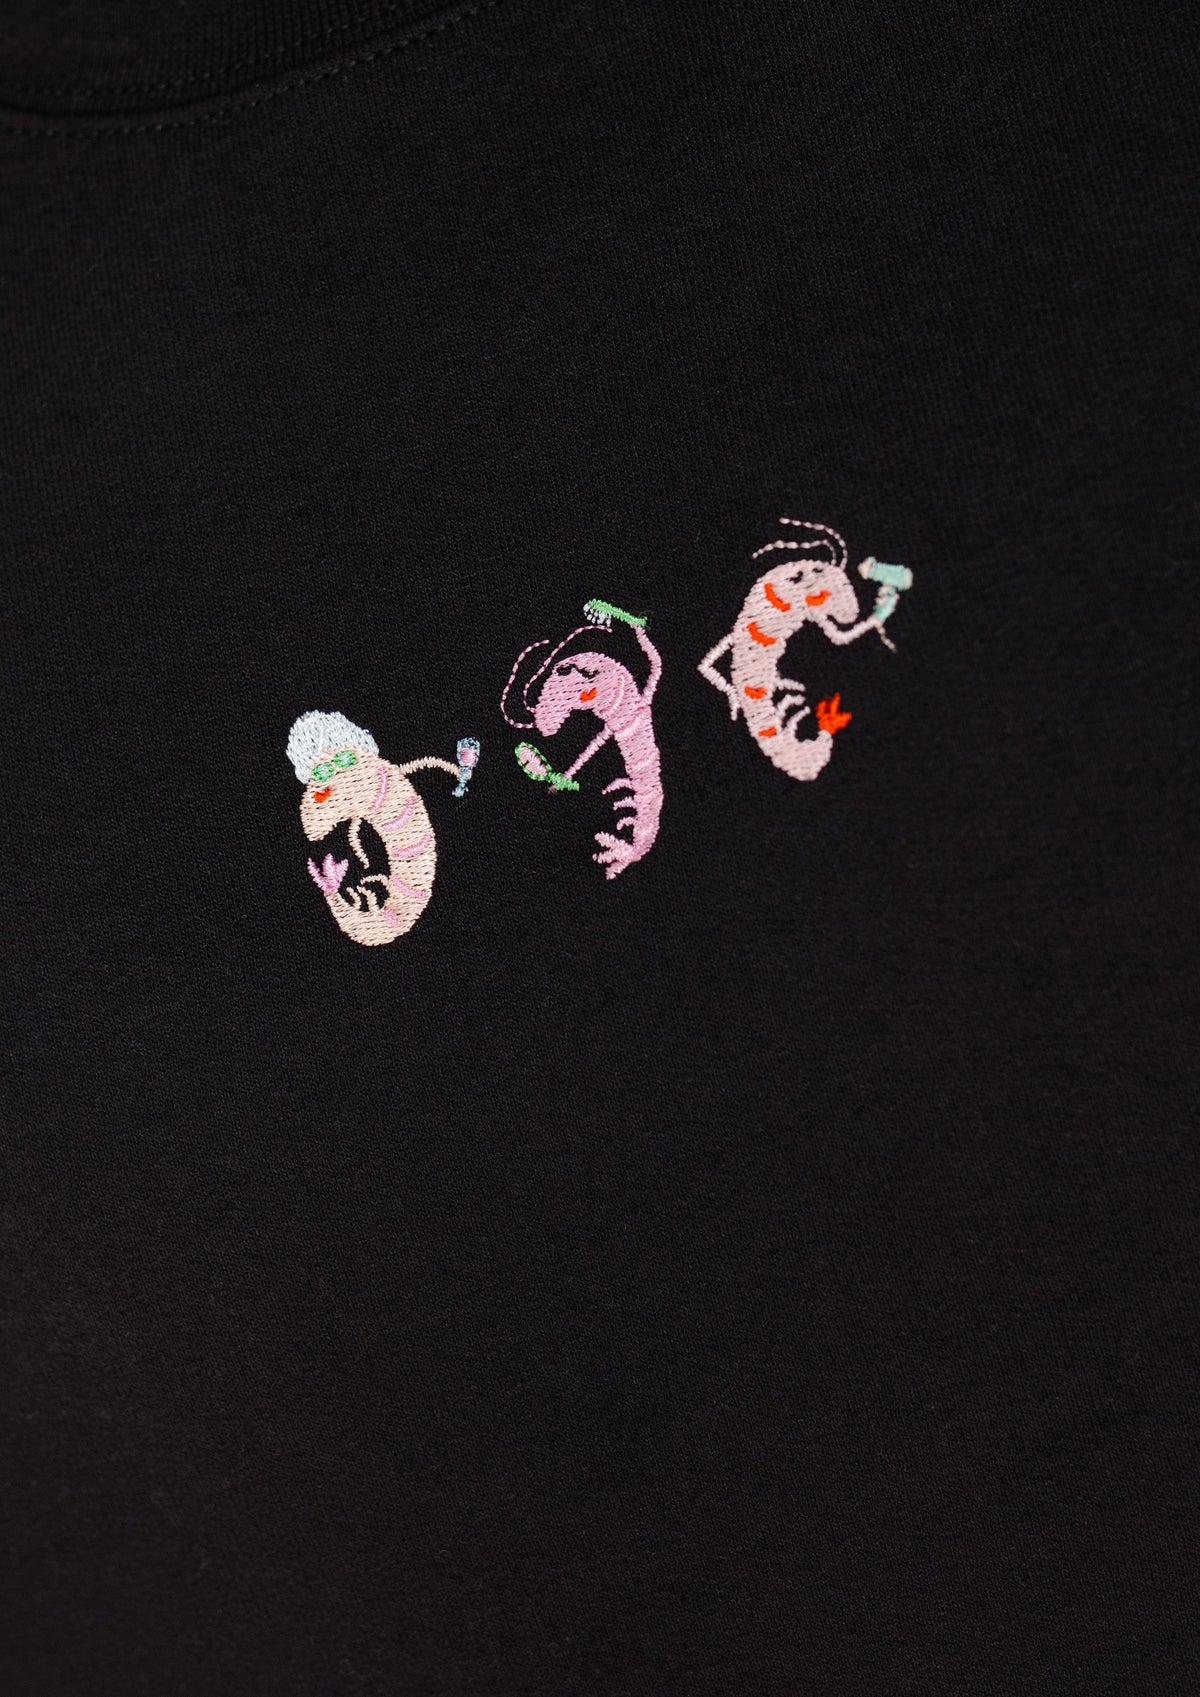 Self Care Shrimps Embroidered Sweatshirt